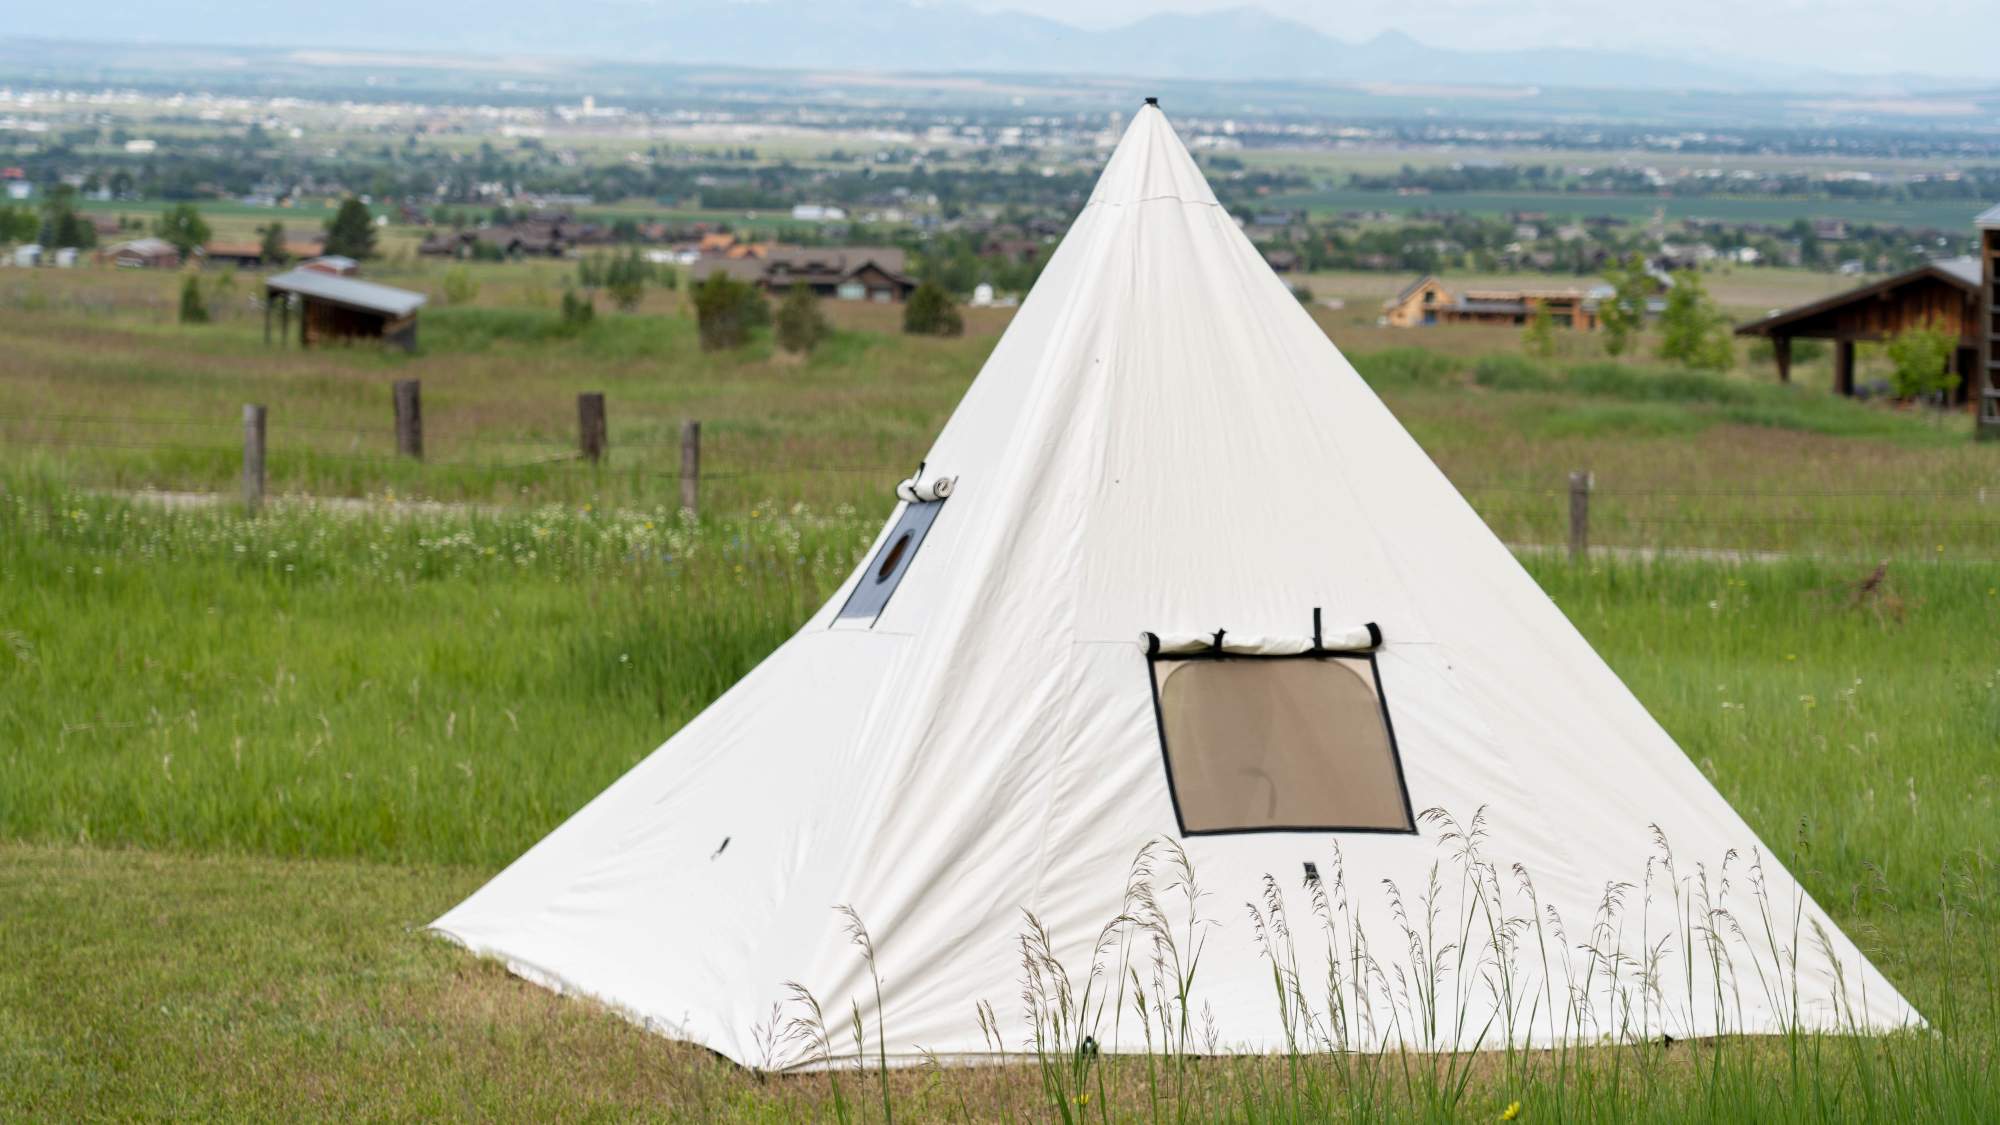 Canvas Range Tent in Grassy Field